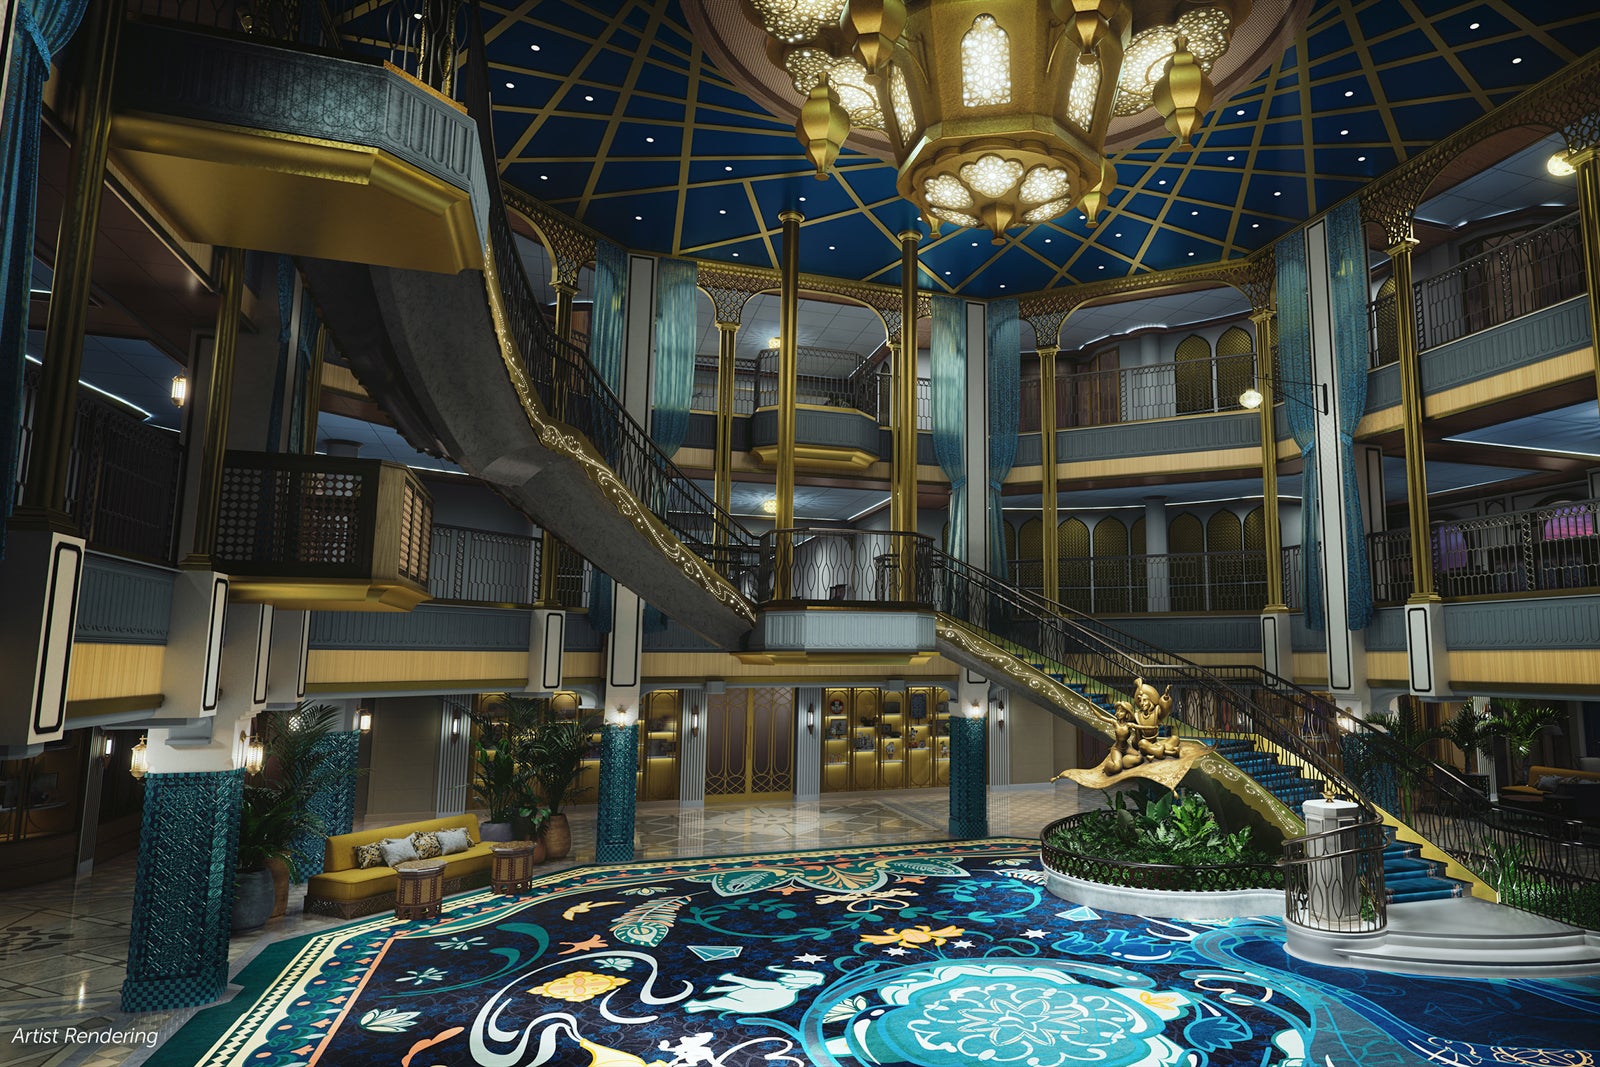 Artist's rendering of Disney Treasure's Grand Hall.